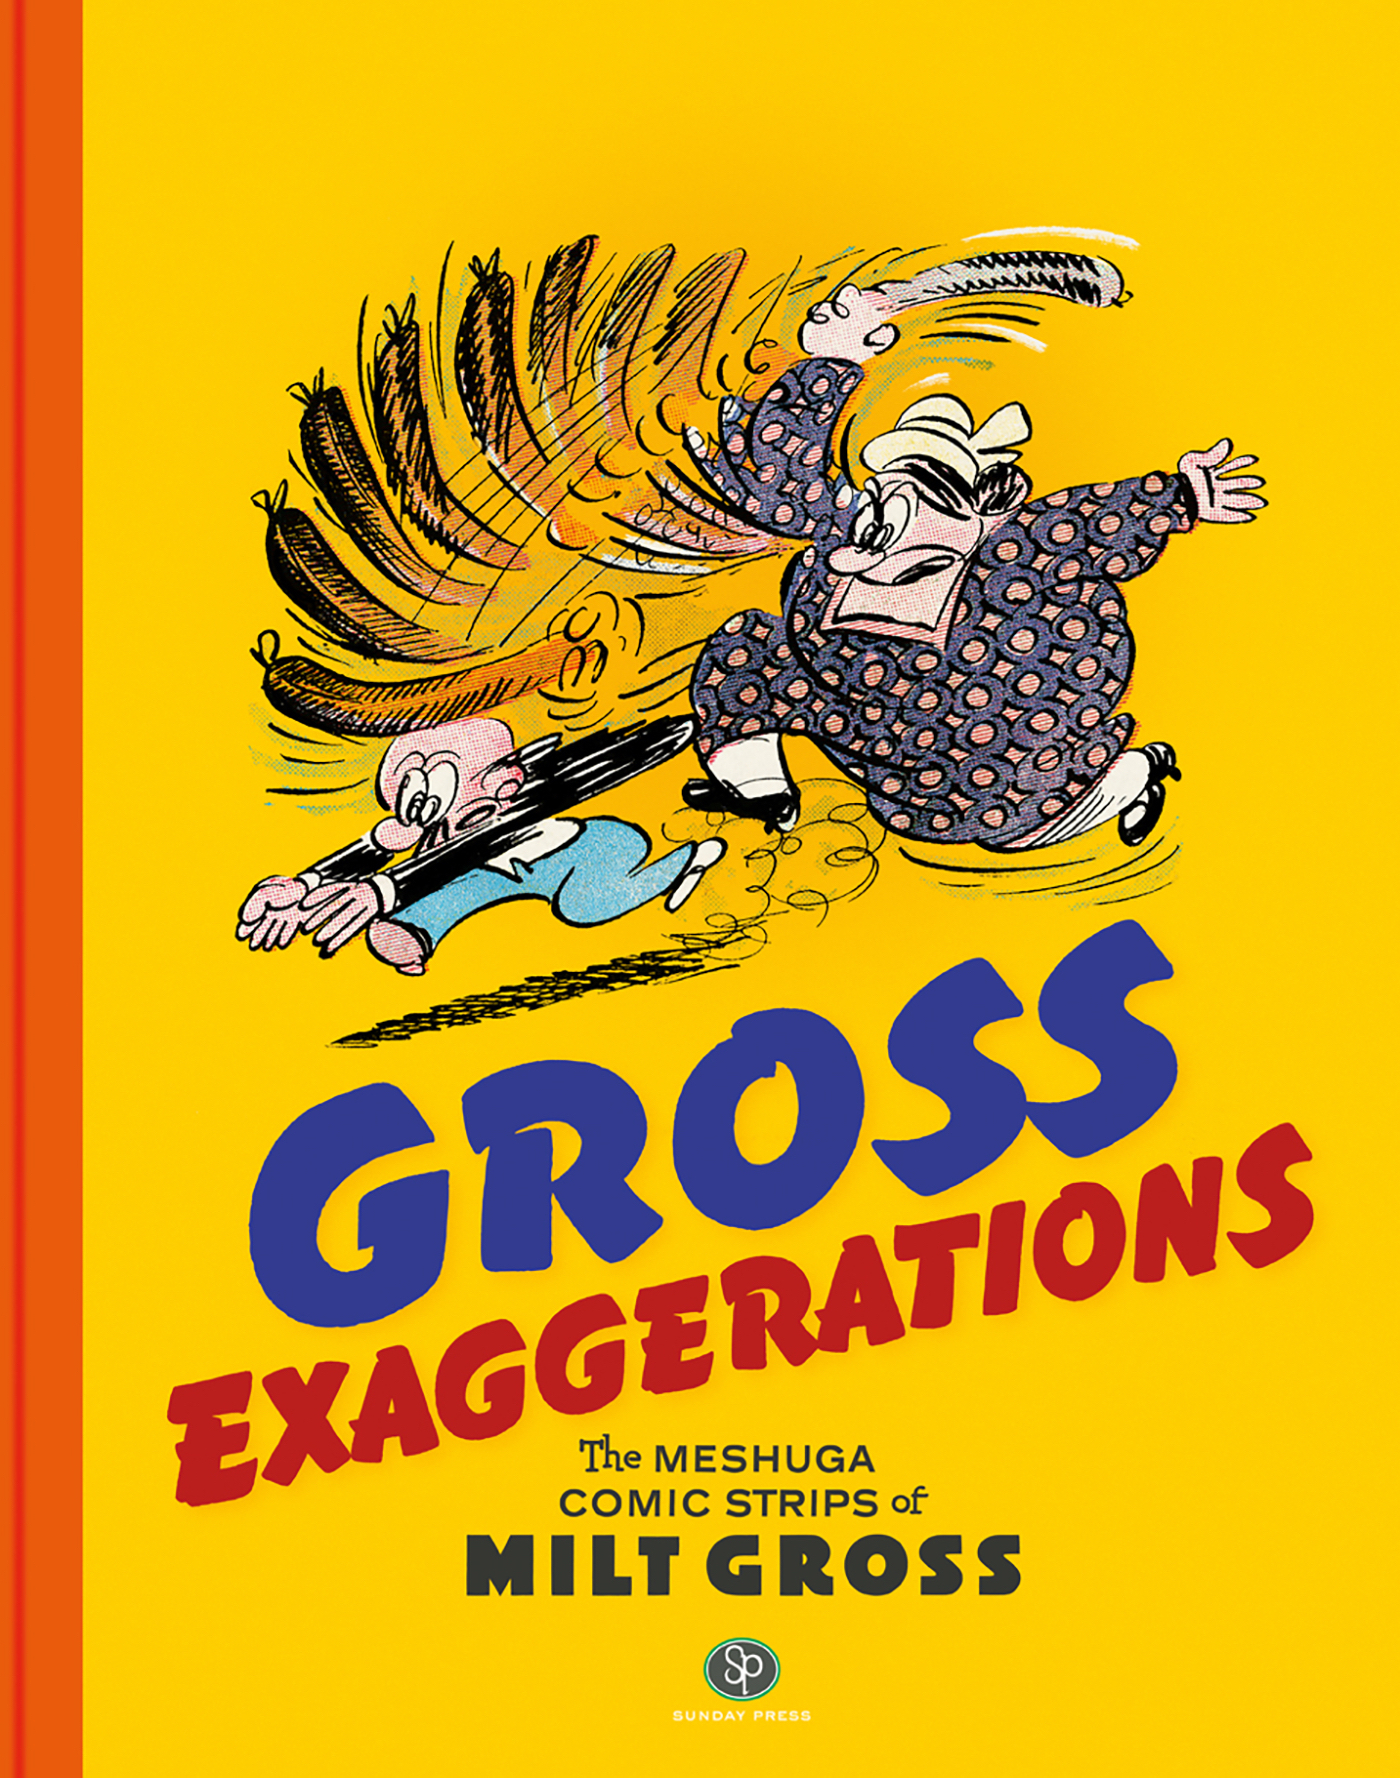 GROSS EXAGGERATIONS MESHUGA COMICS MILET GROSS HC